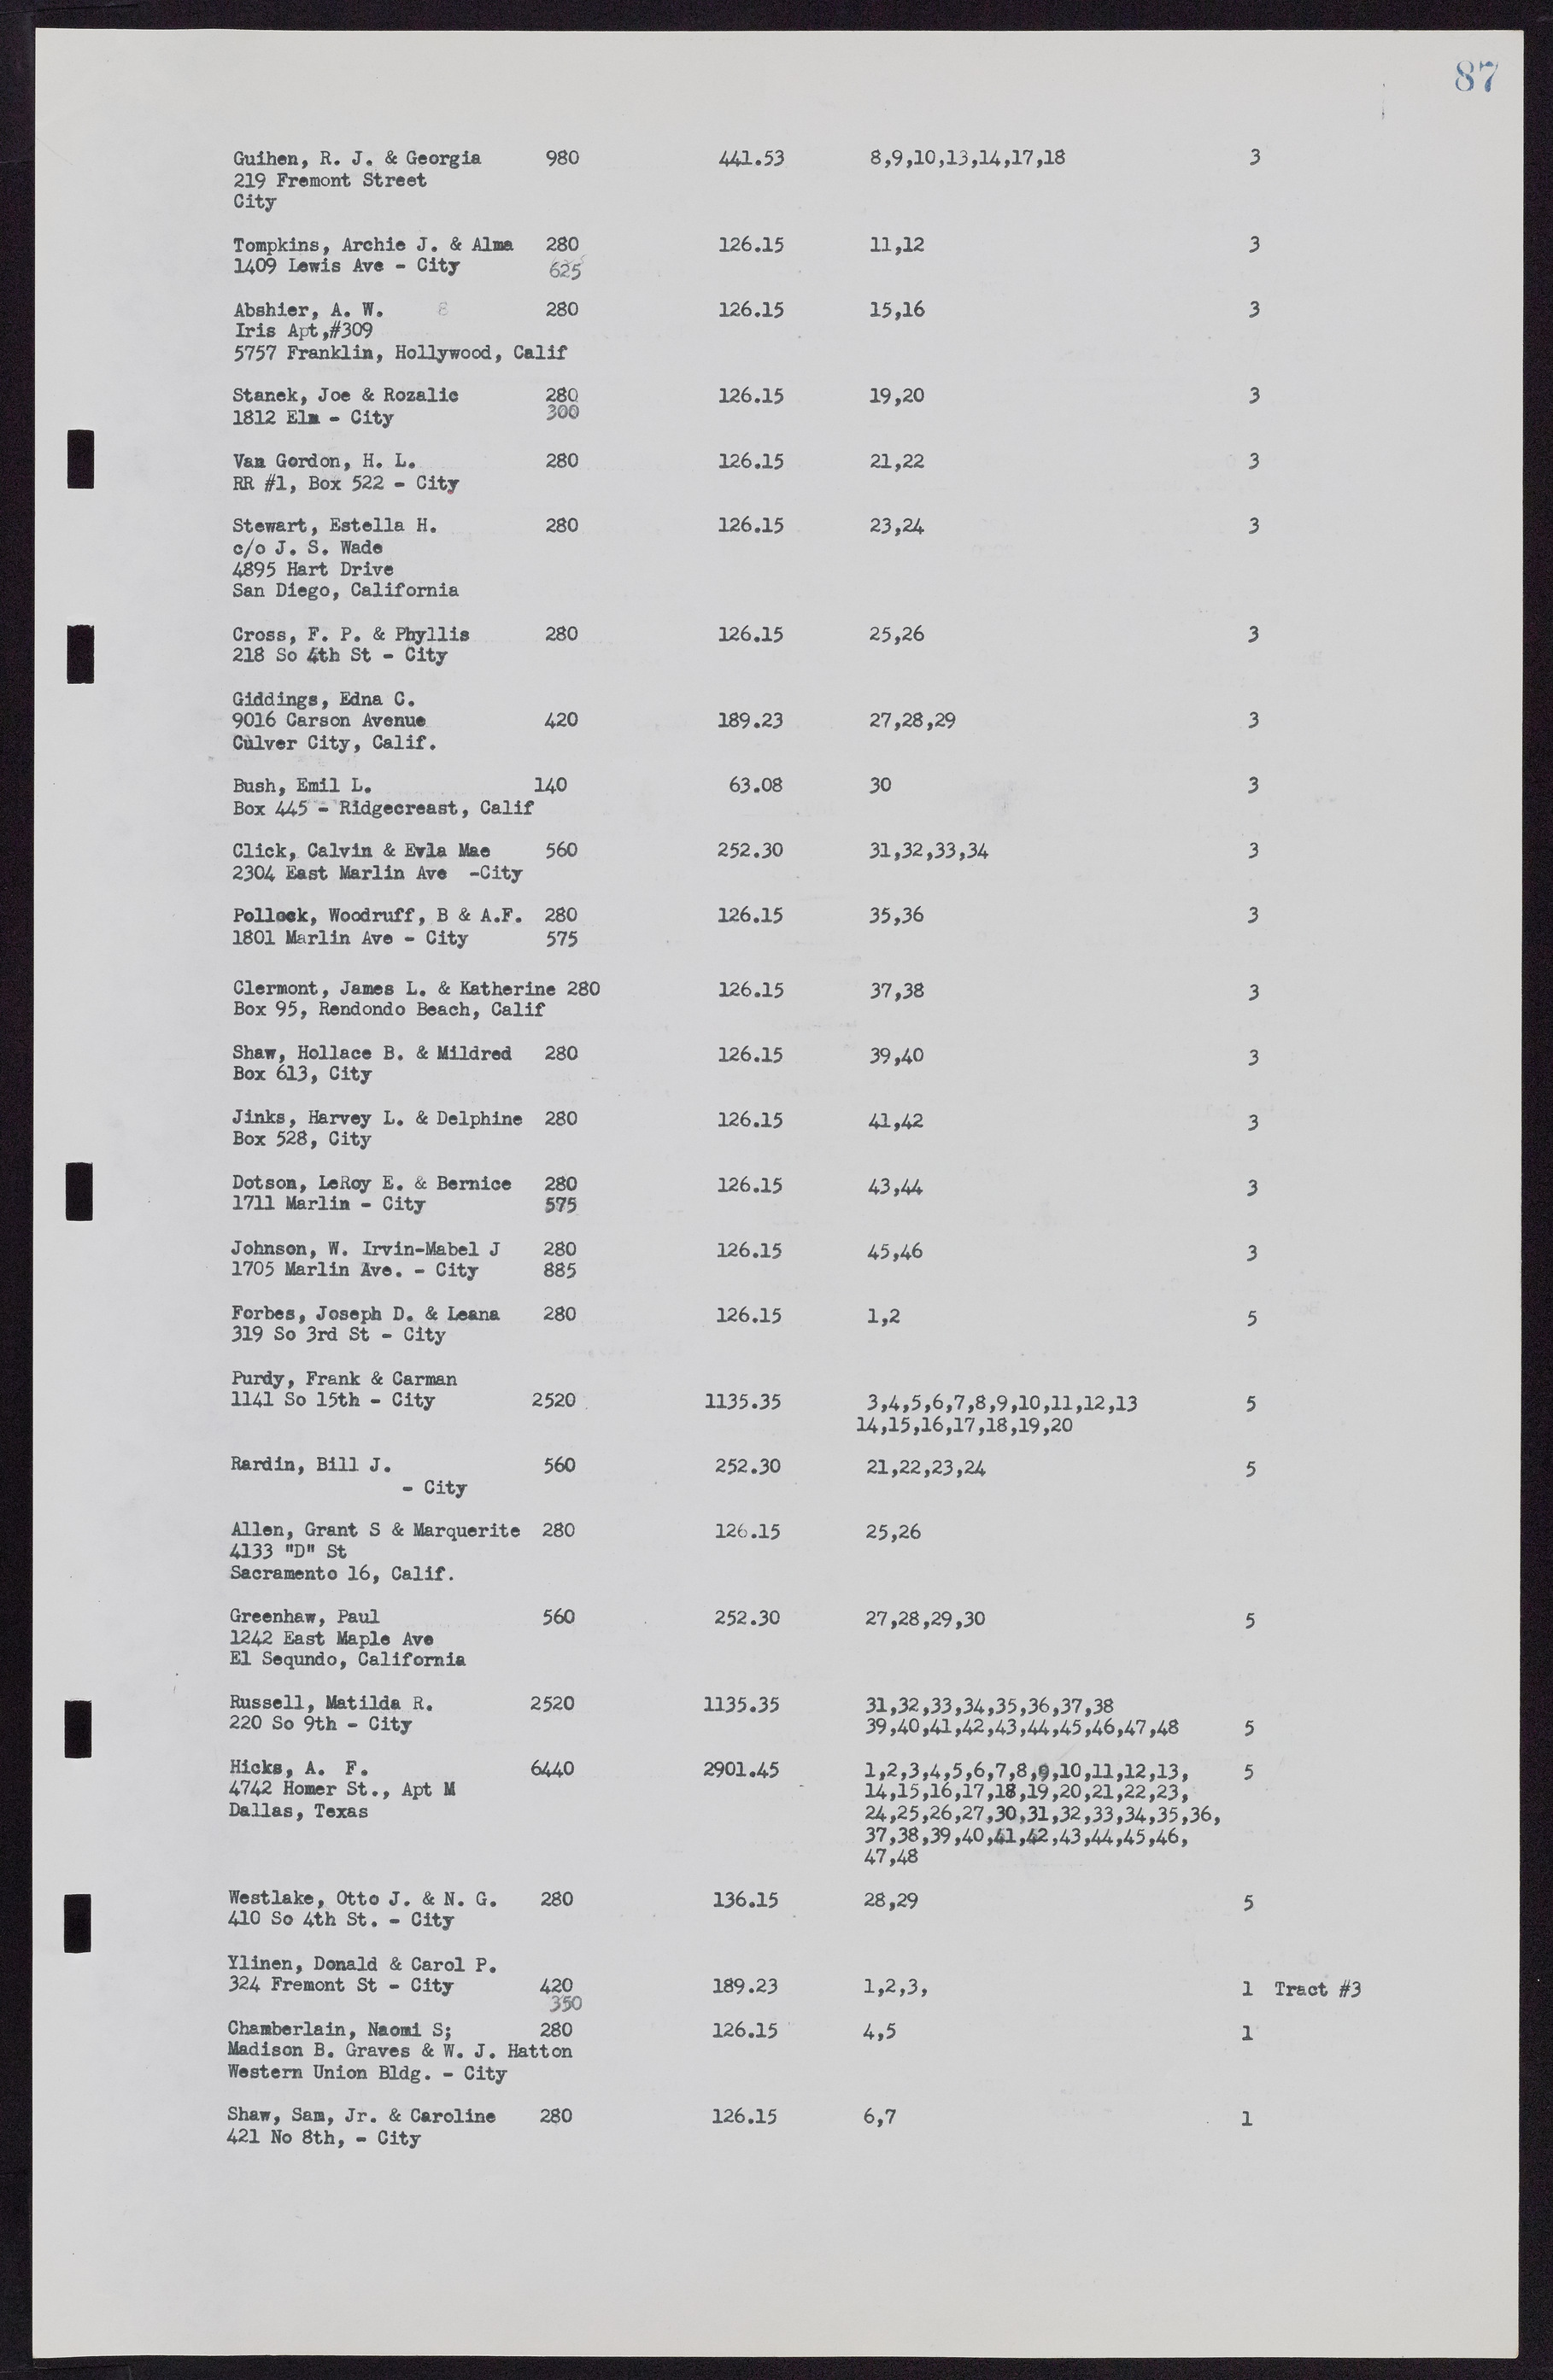 Las Vegas City Commission Minutes, November 7, 1949 to May 21, 1952, lvc000007-95